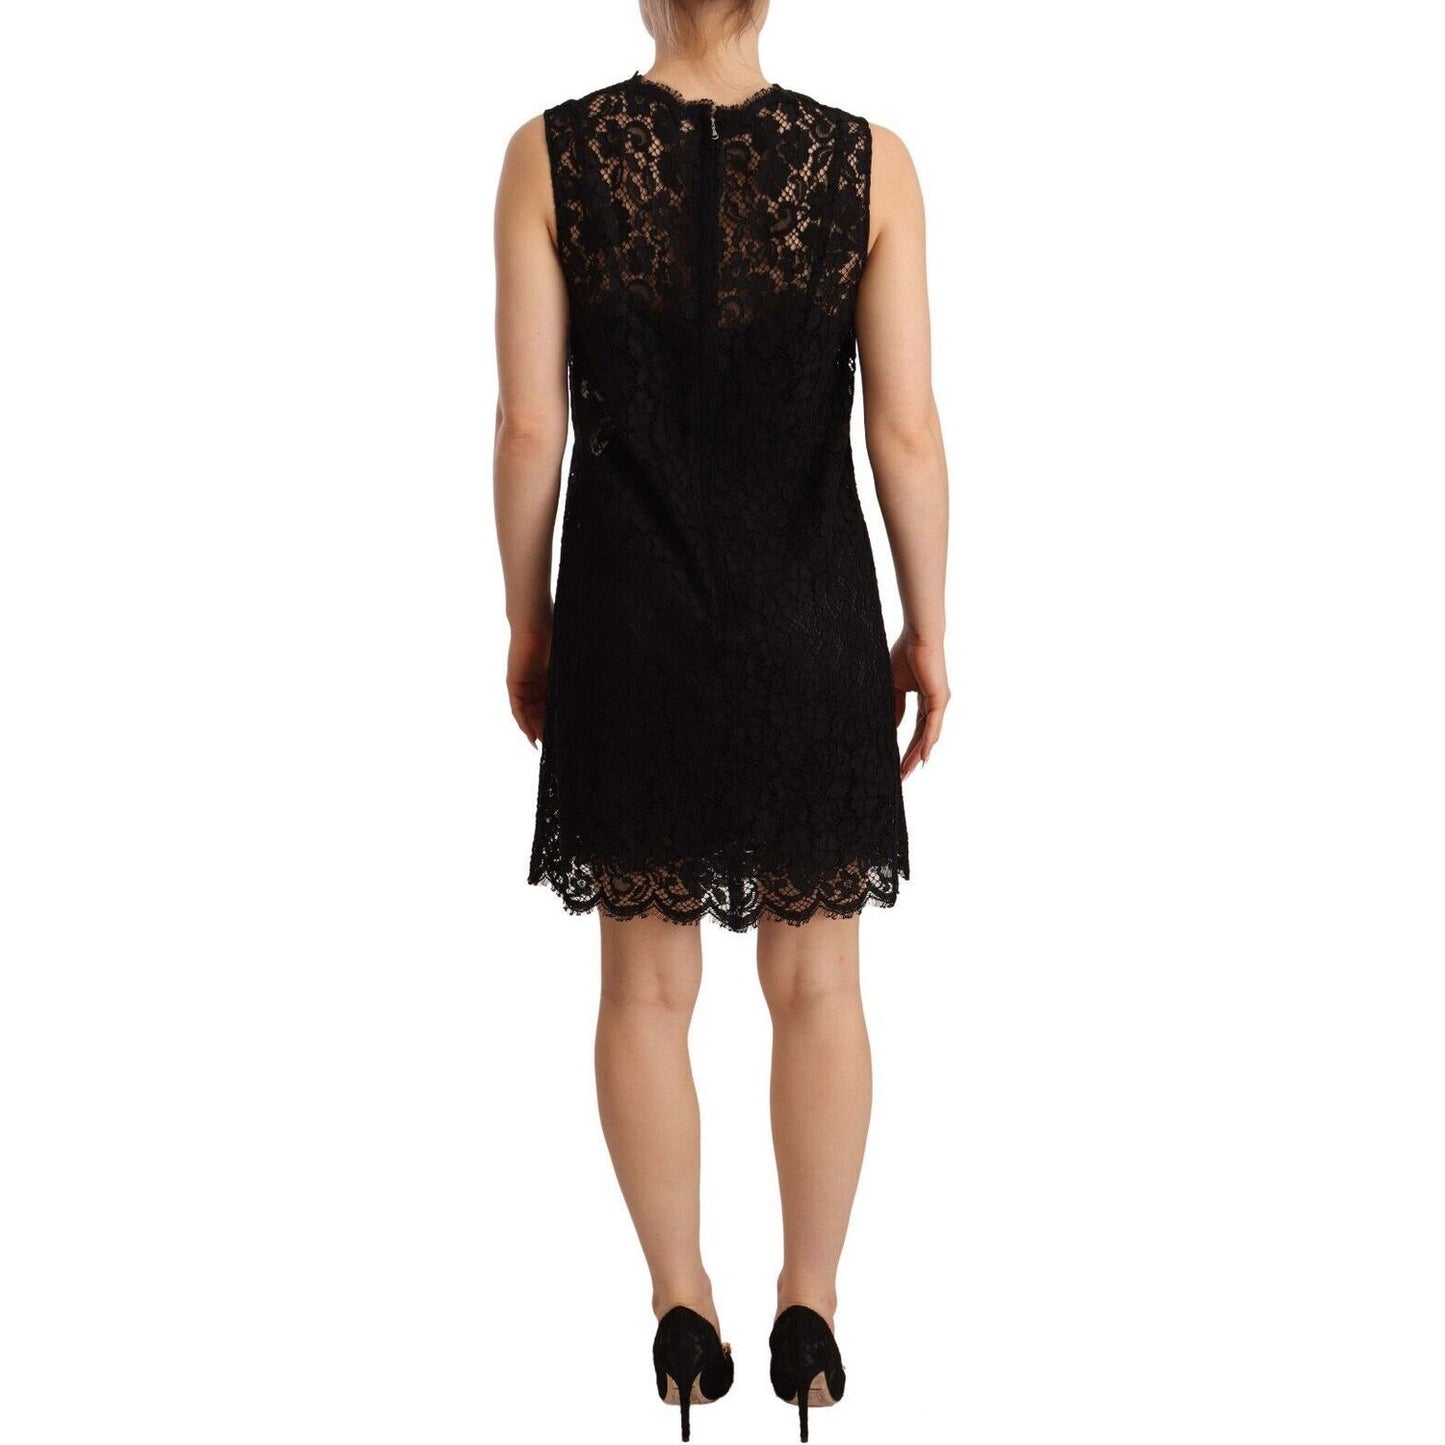 Dolce & Gabbana Elegant Floral Lace Sheath Dress in Black black-floral-lace-sheath-sleeveless-mini-dress s-l1600-2-57-138e3d51-892.jpg